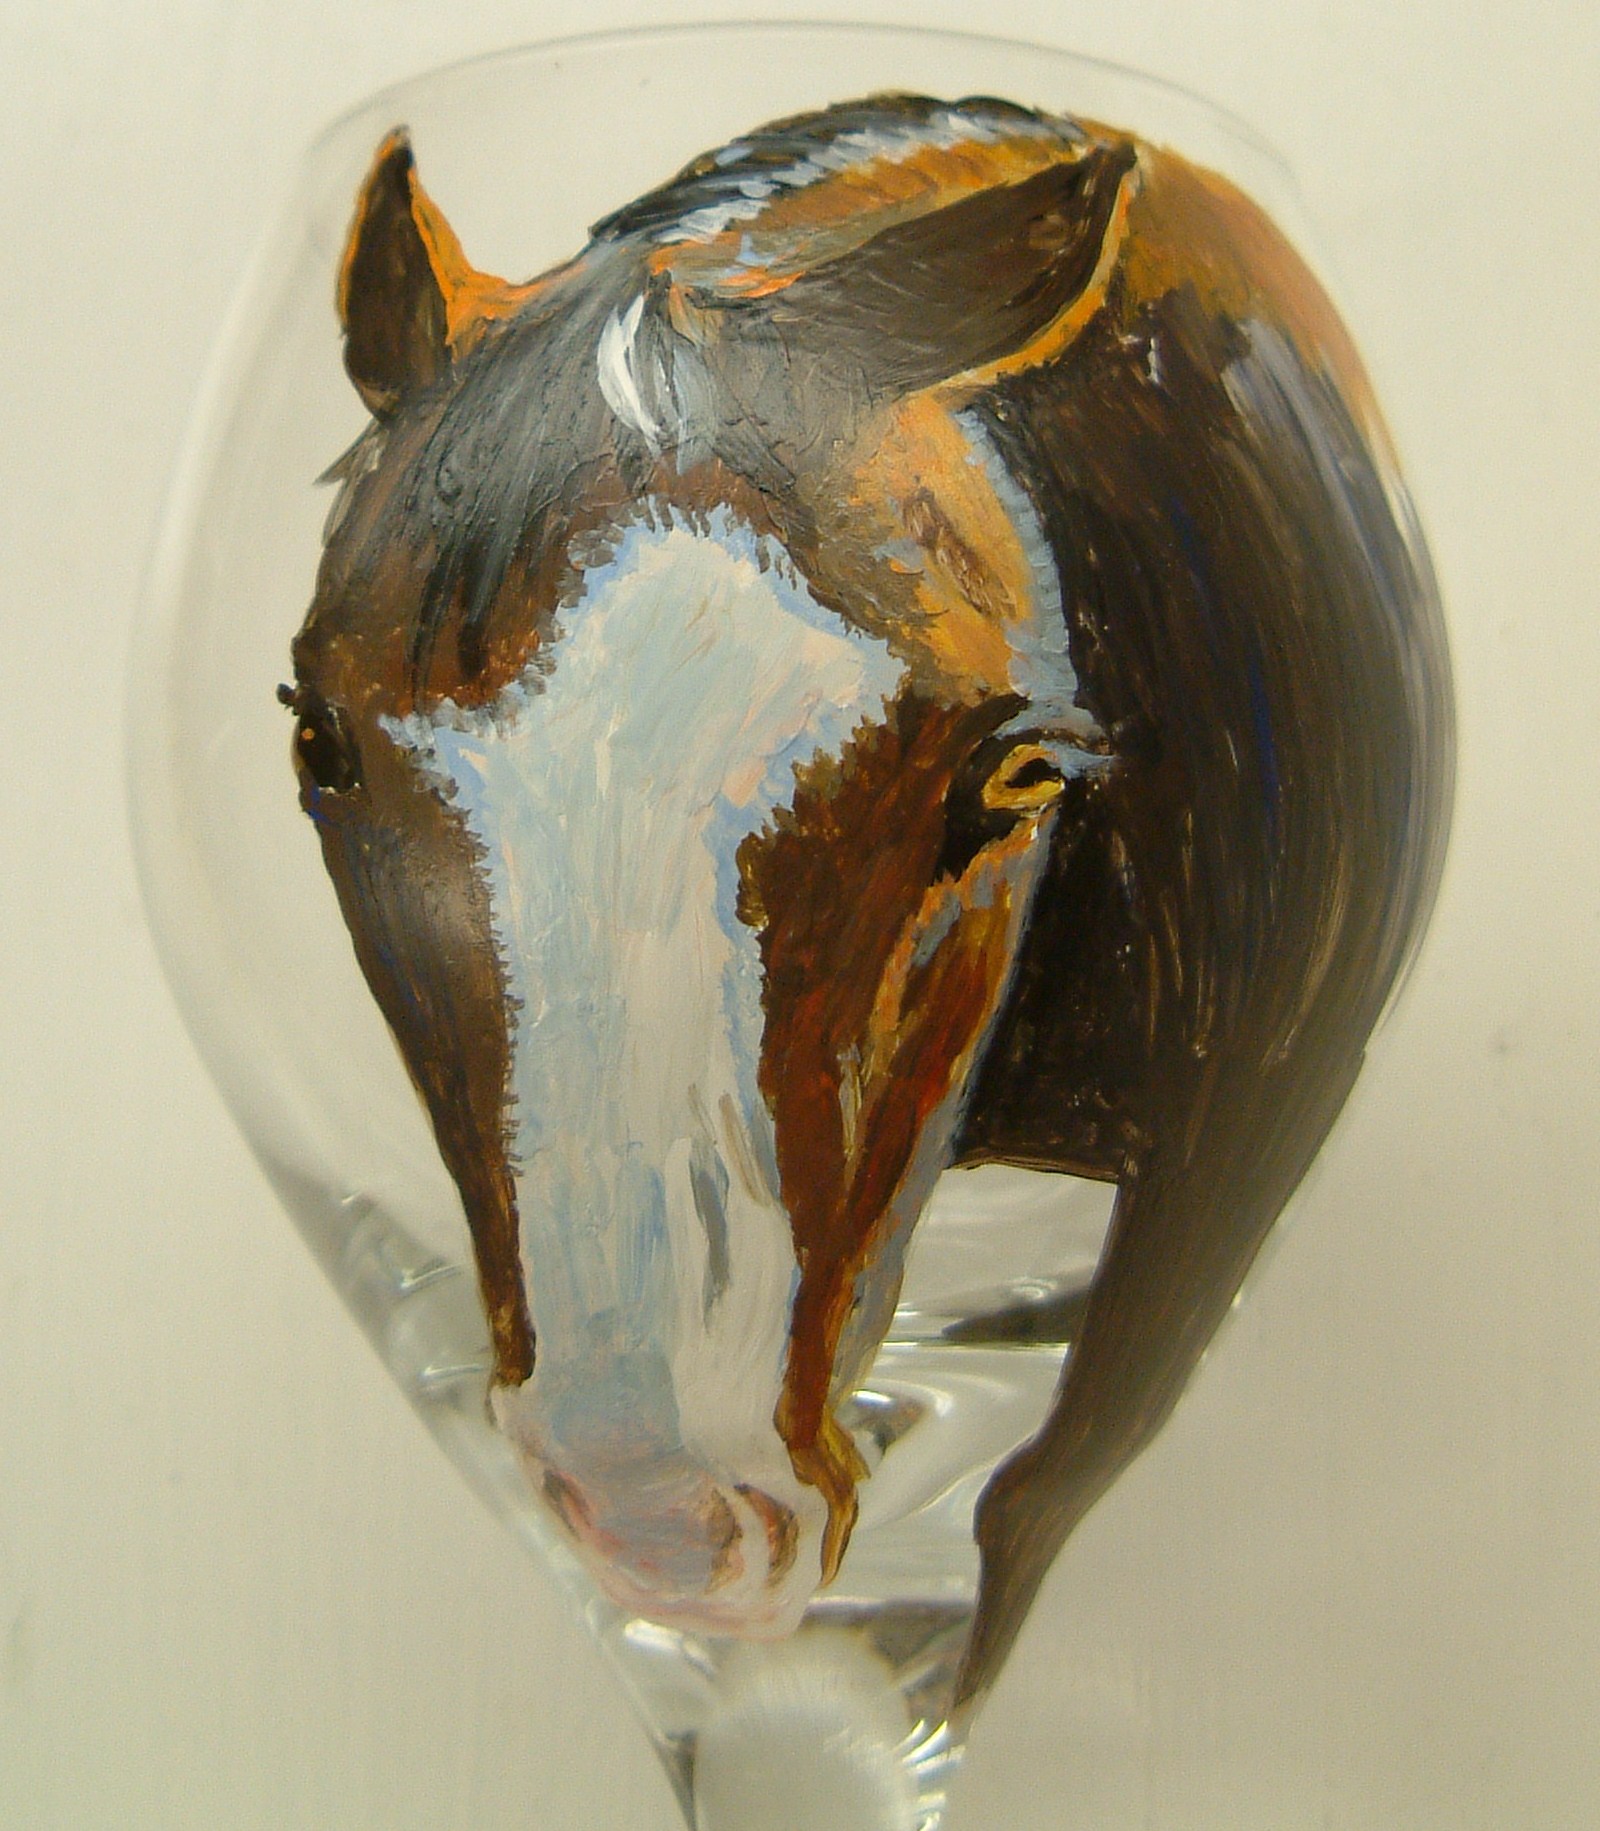 Horse-portrait-detail-on-wine-glass